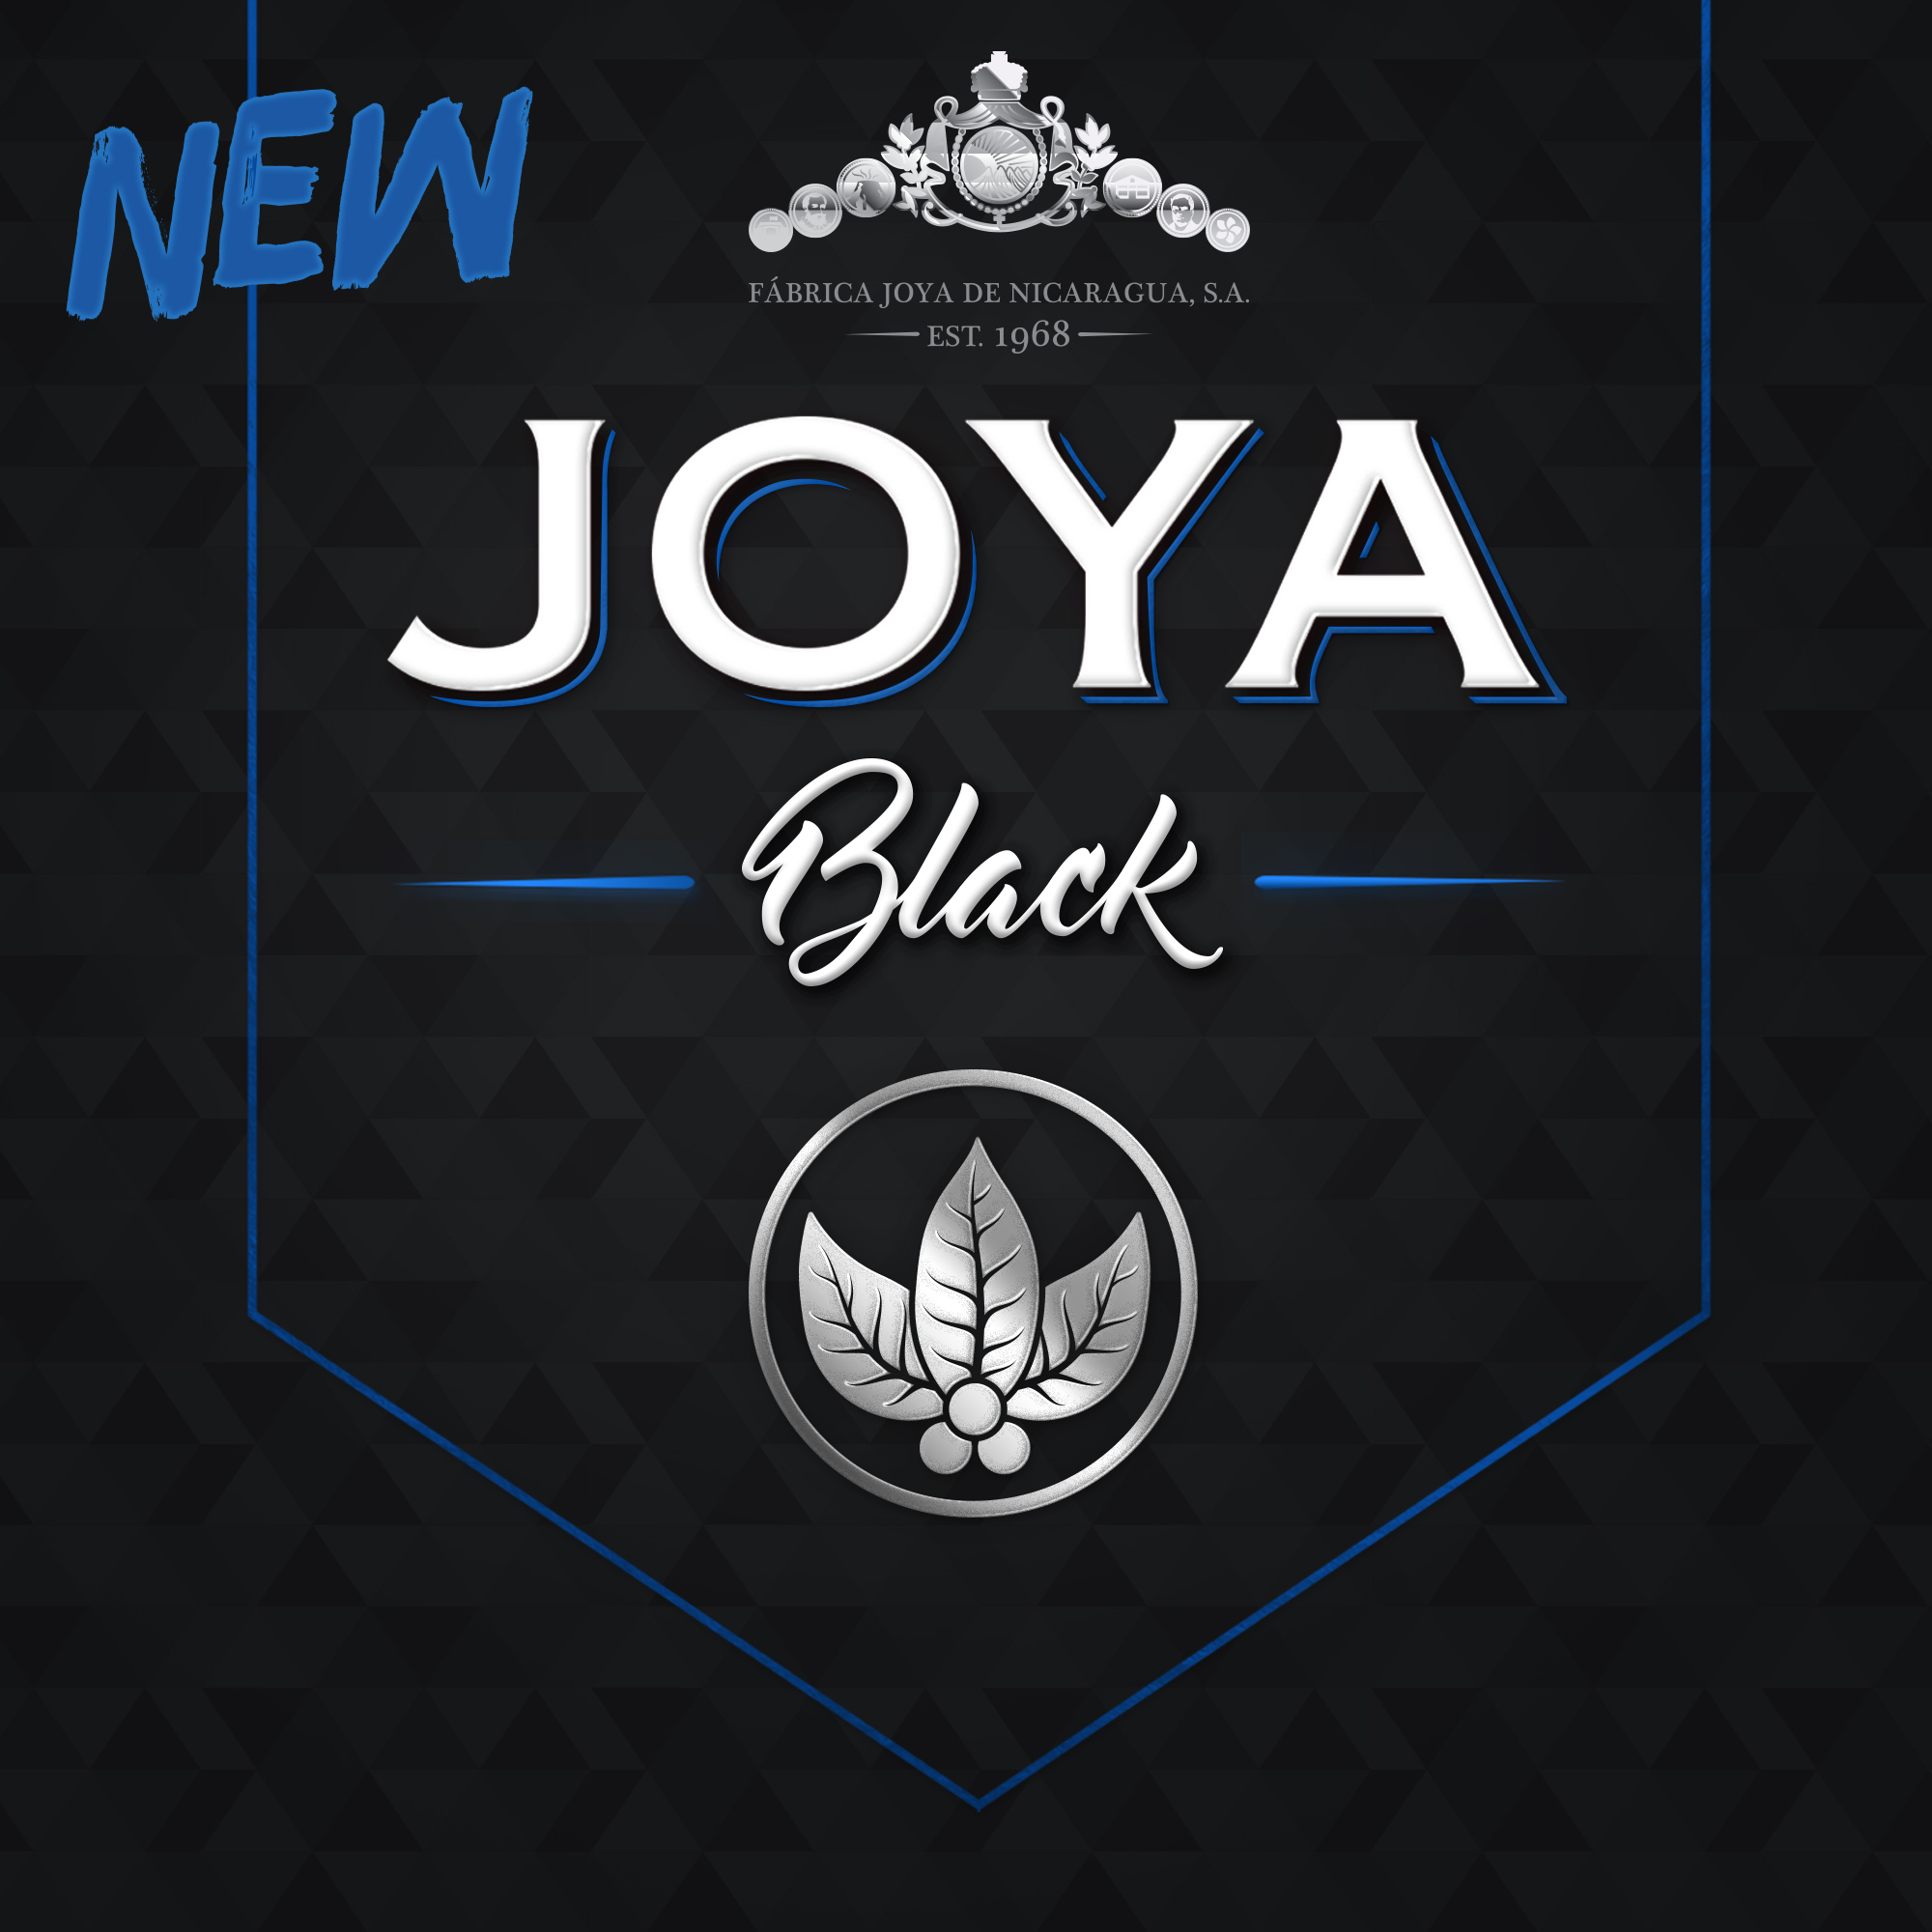 Cigar Insider Reports on the New Joya Black!